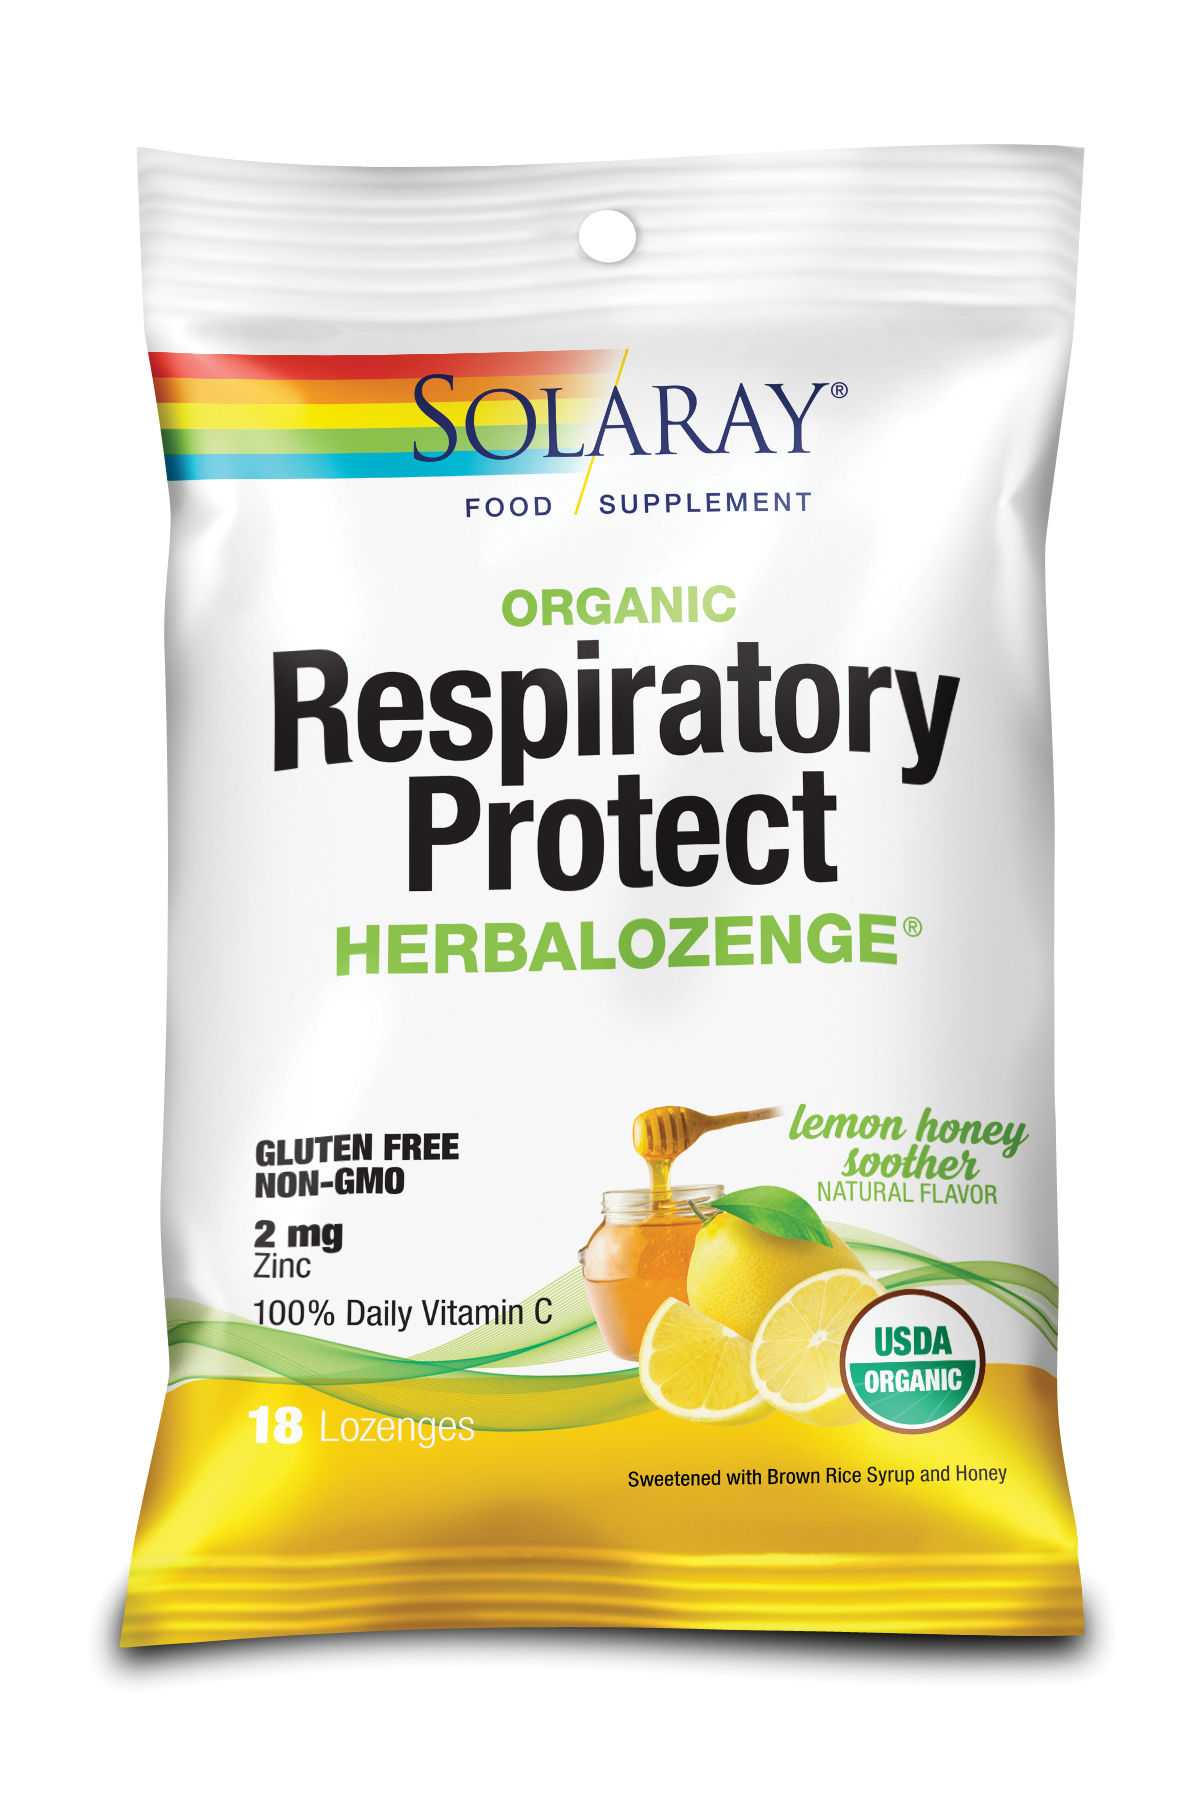 Dureri de gat - Dropsuri pentru gât Respiratory Protect HerbaLozenge Lemon Honey Soother Solaray, 18 bucăți, Secom, sinapis.ro